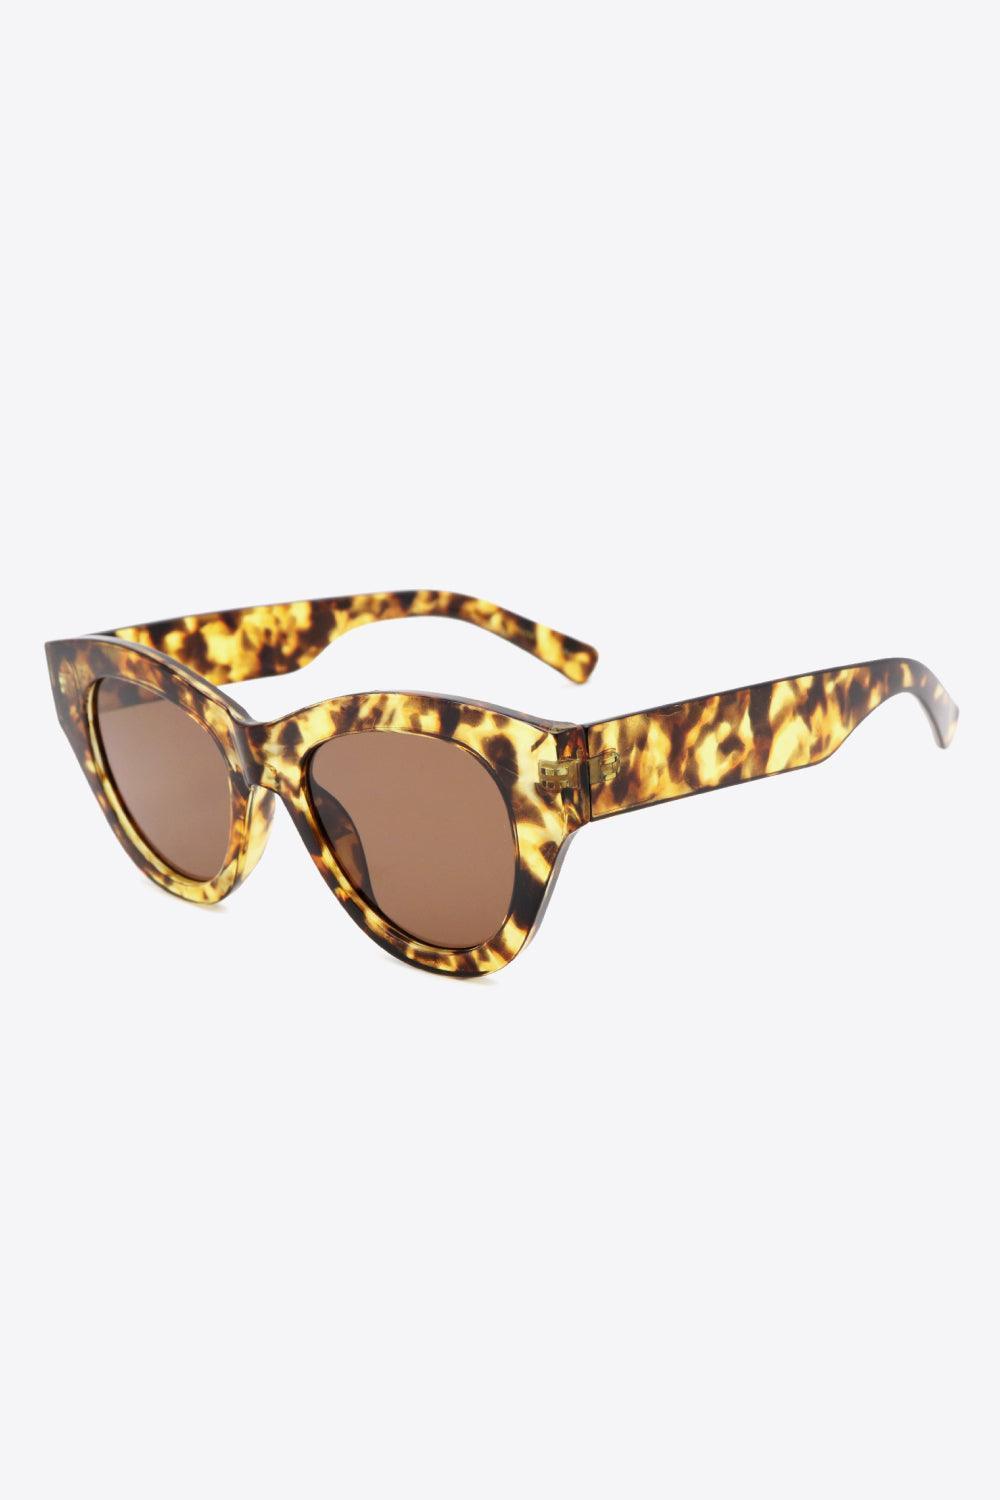 Women's Polycarbonate Wayfarer Tortoiseshell Sunglasses - MXSTUDIO.COM